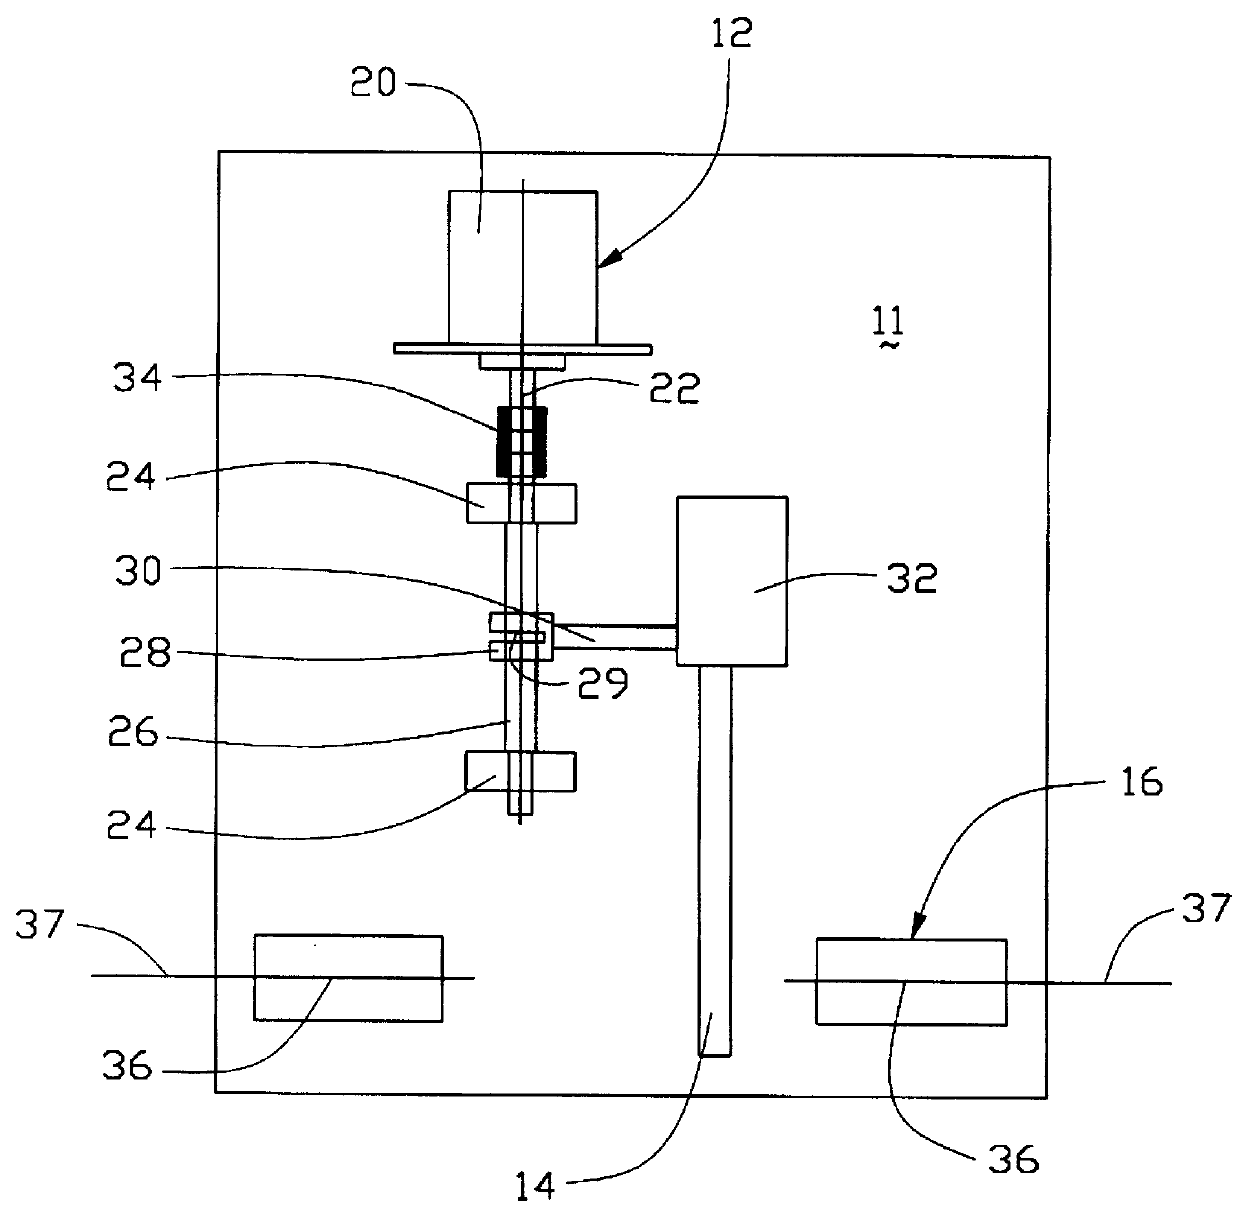 Motor driven optical fiber variable attenuator